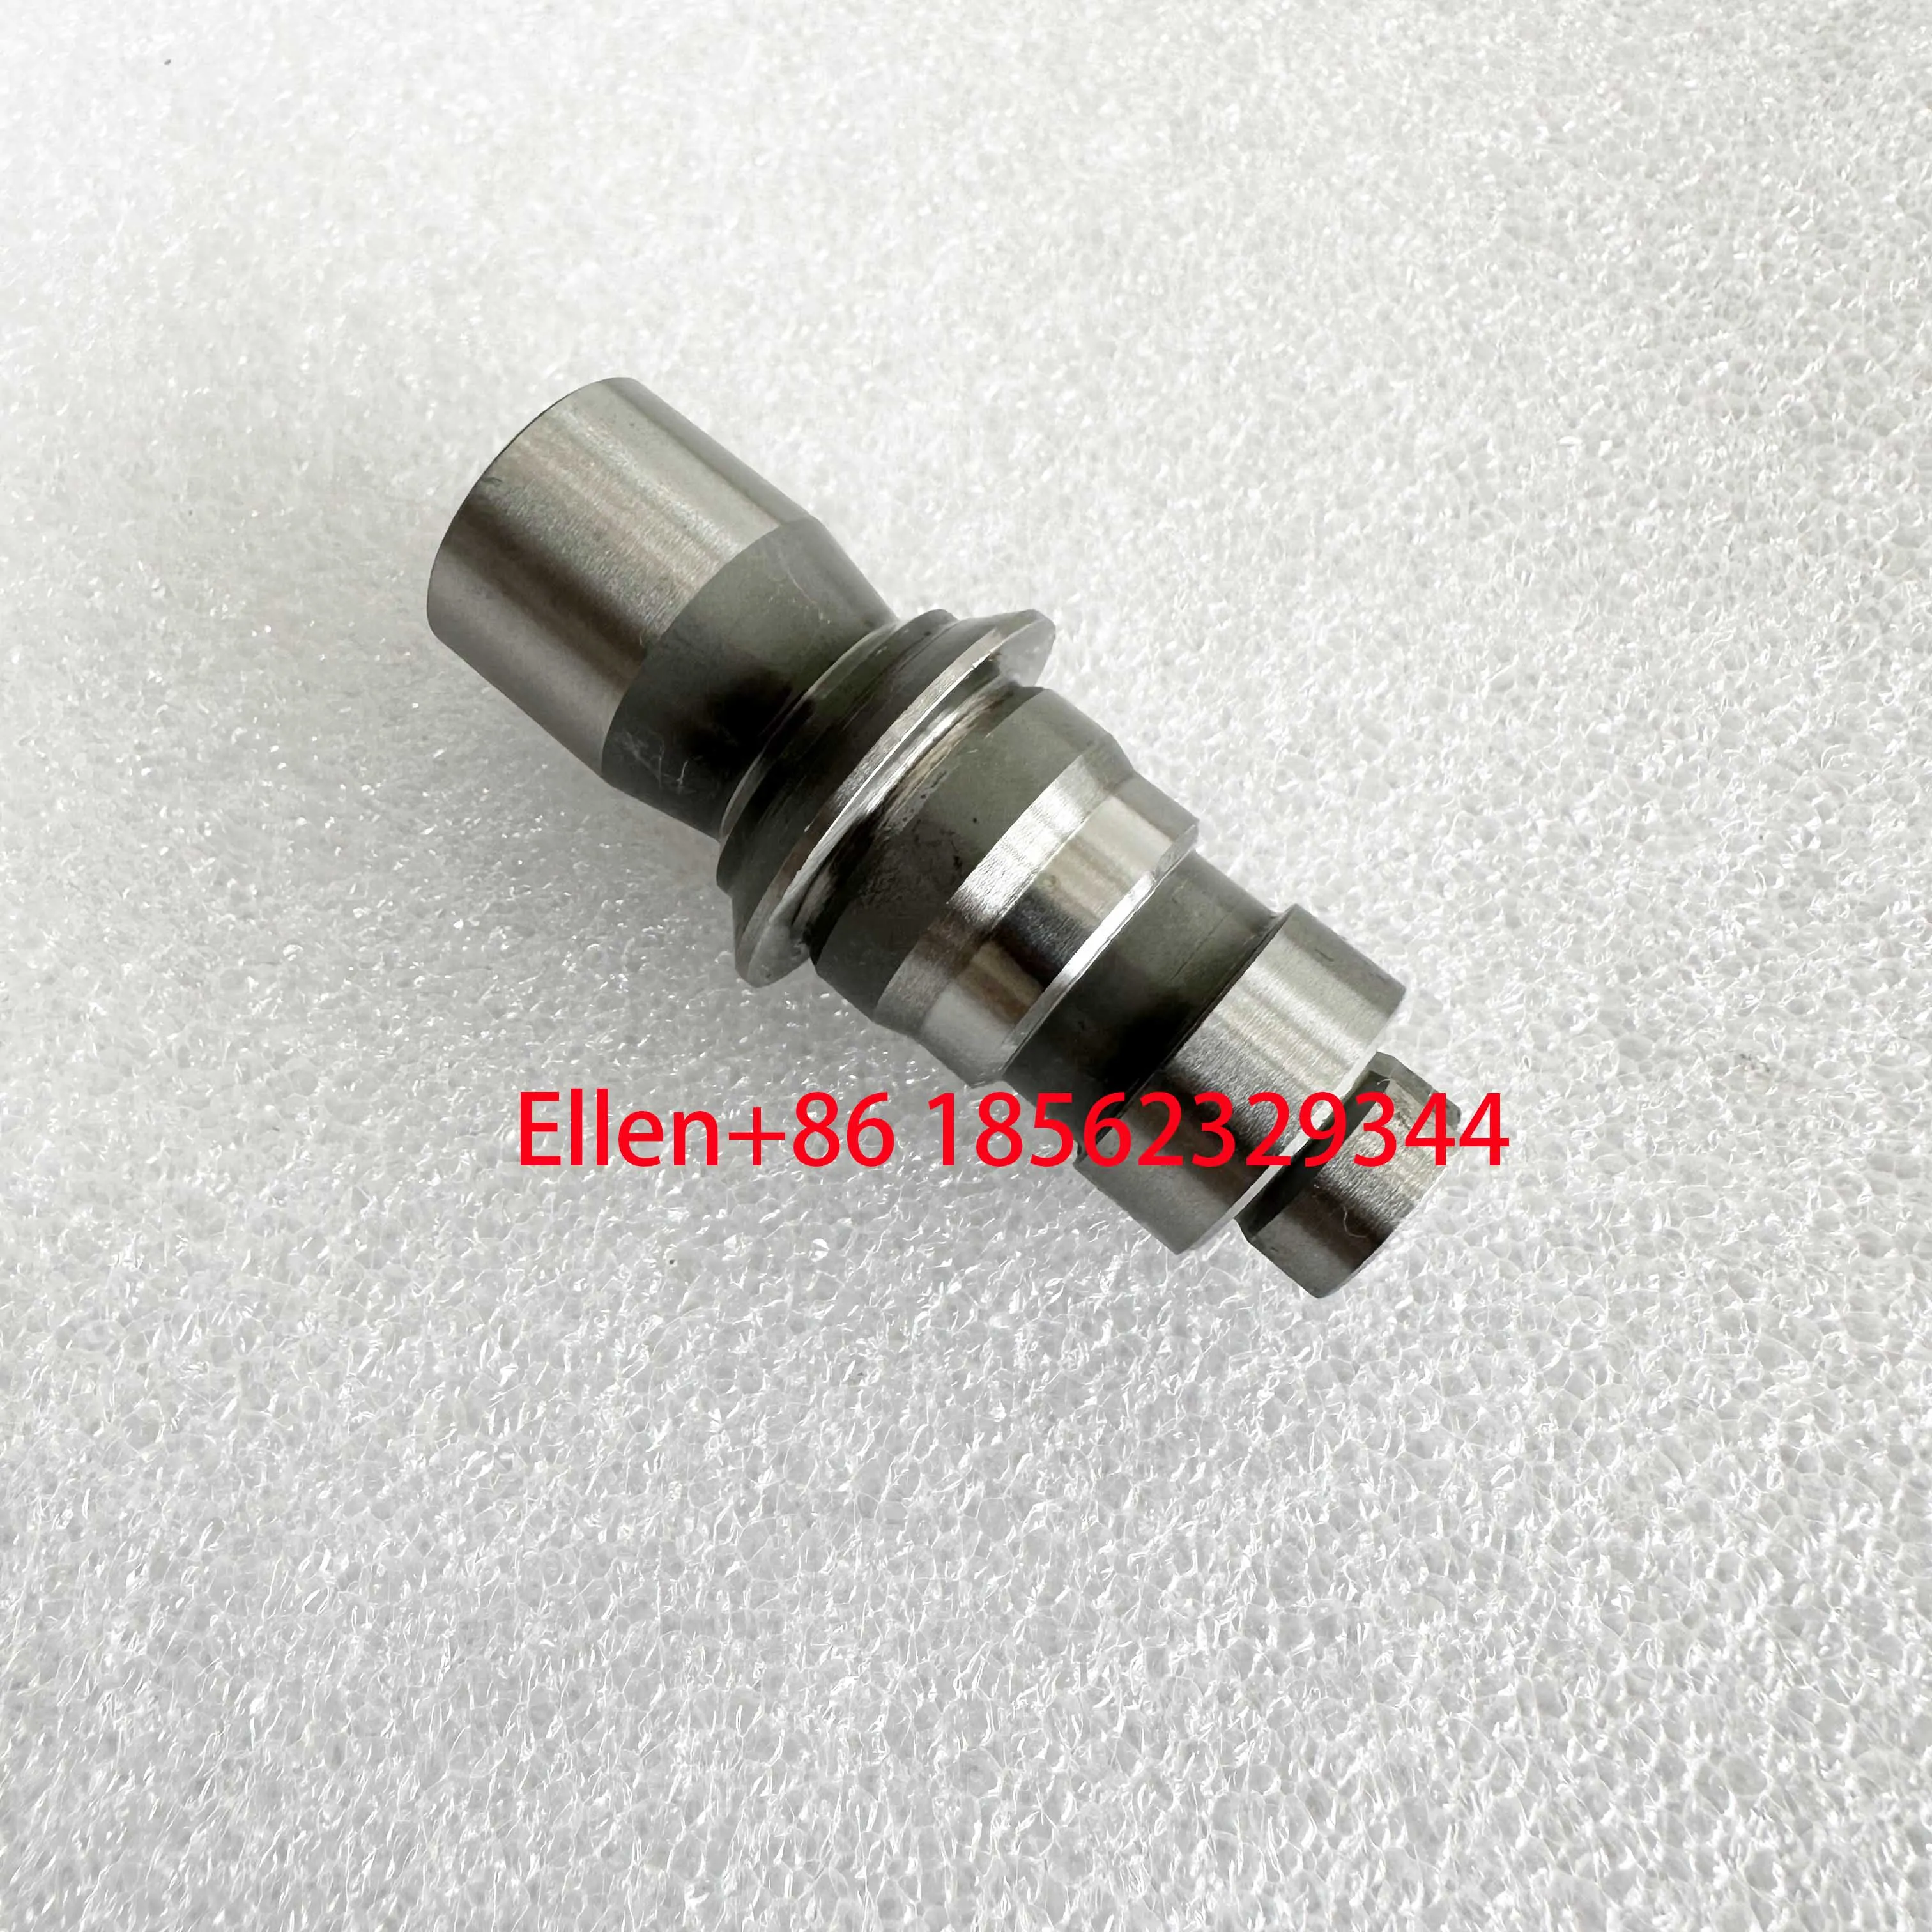 

6pcs CAT 3412e valve core for Caterpillar 3408 3412E Engine Injector Part number 174-7526 / 10R 1265 / 174-7527 10R 1265